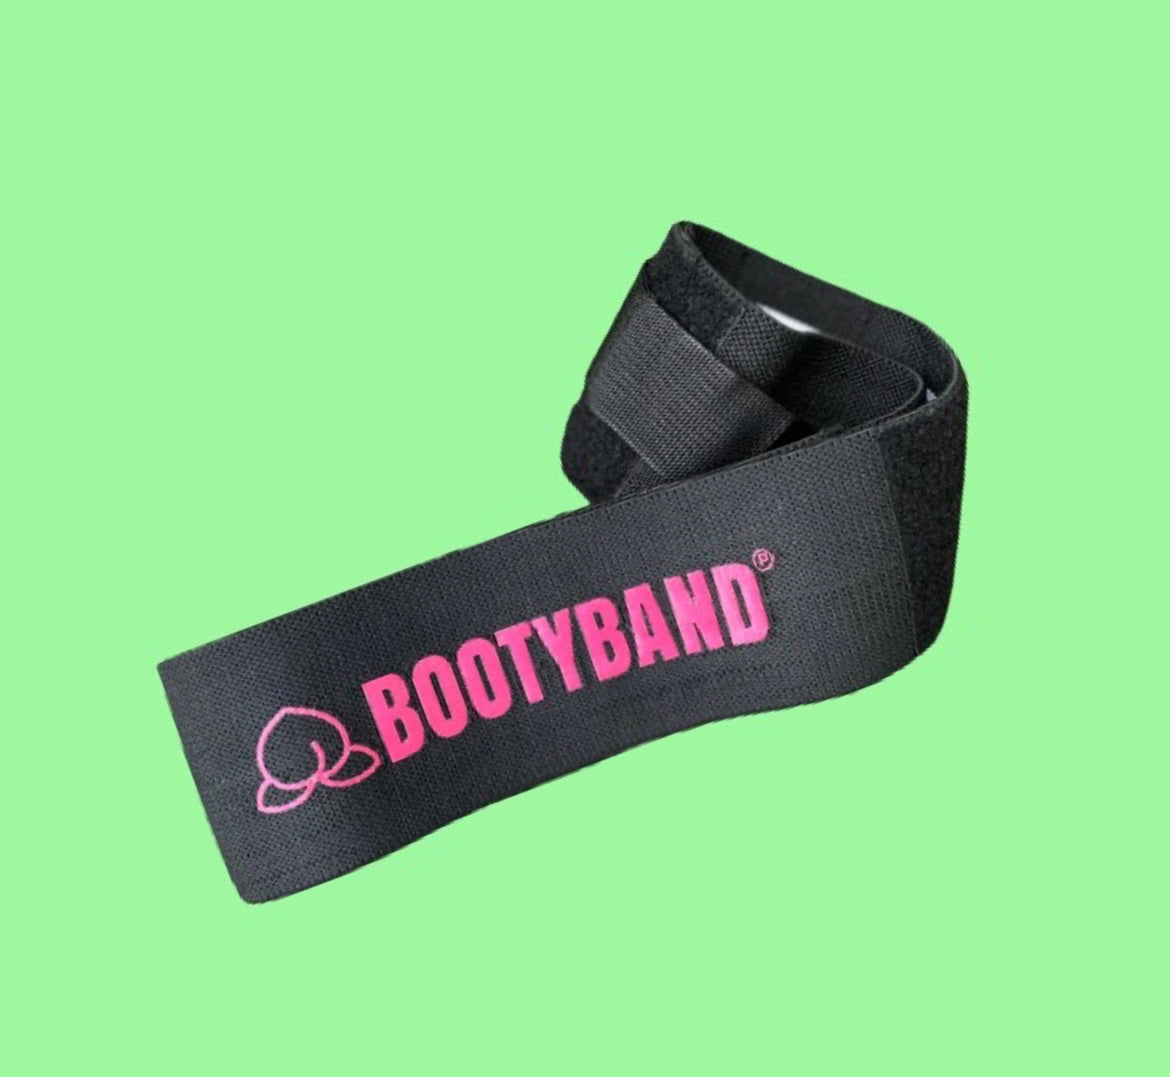 Verstelbare Booty band zwart met roze Bootyband logo. 